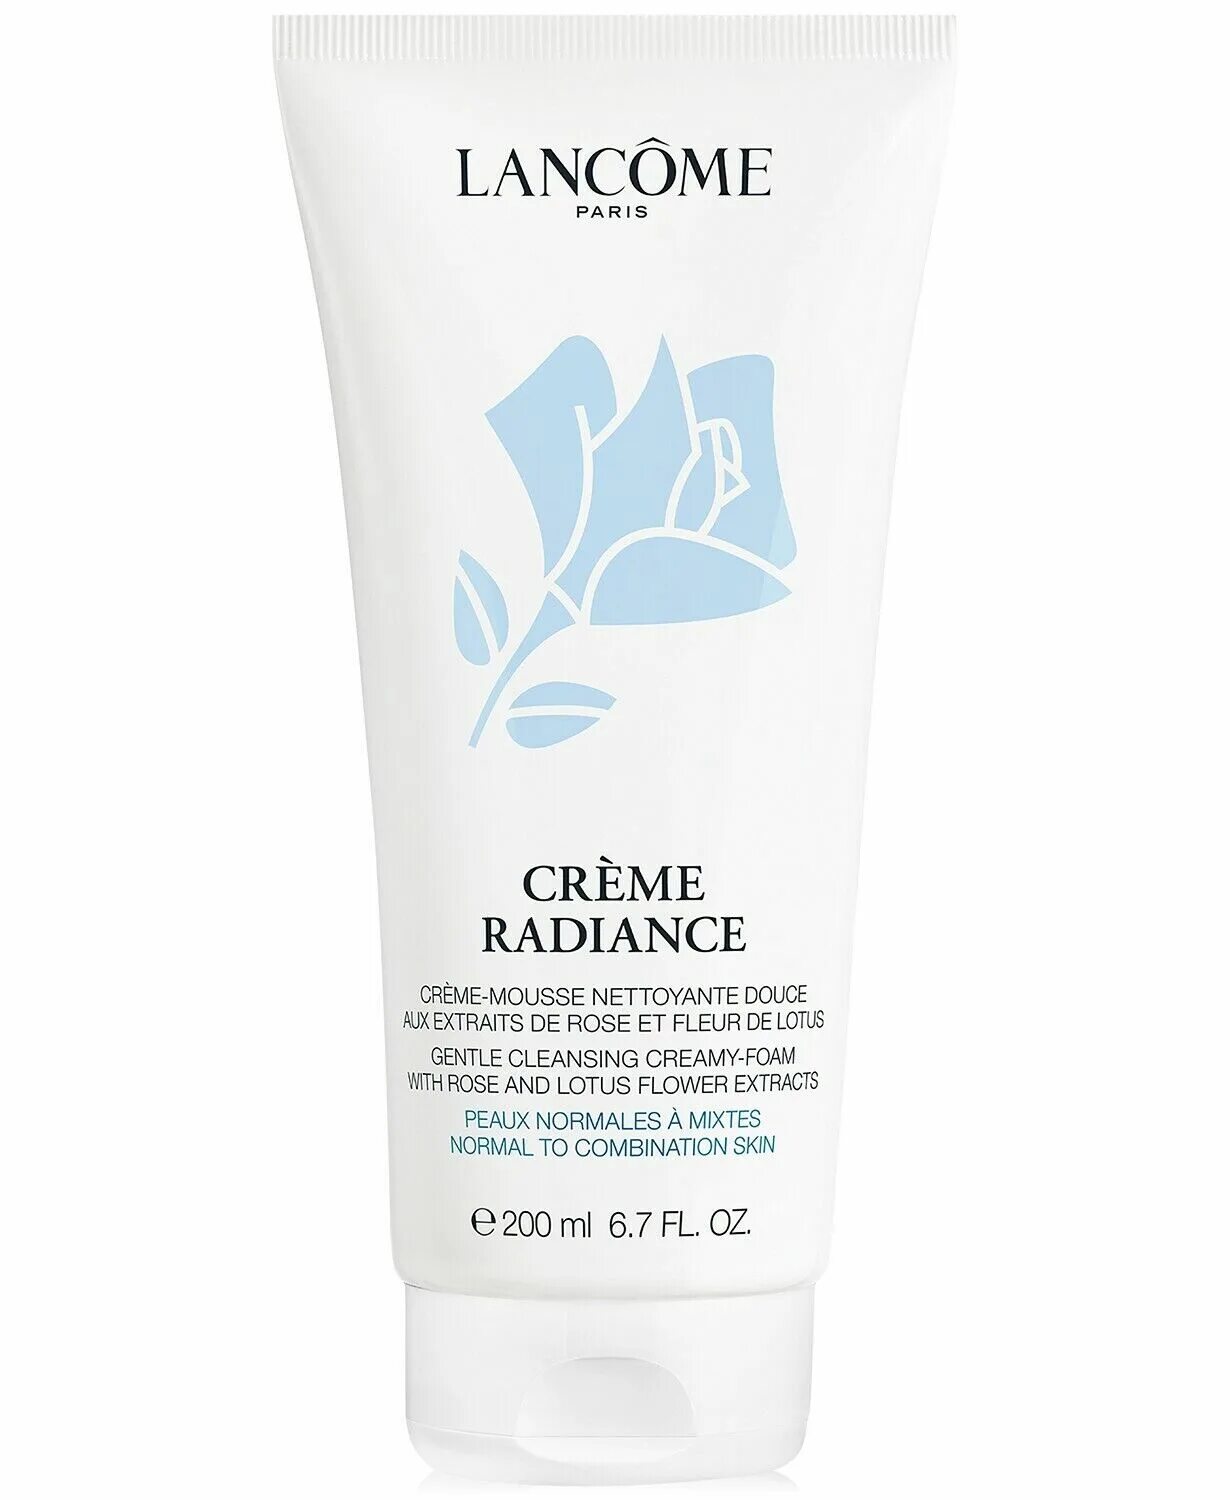 Creme Radiance Lancome. Lancome Creme Mousse Confort. Lancome Creme Radiance gentle Cleansing. Lancome face Cream.